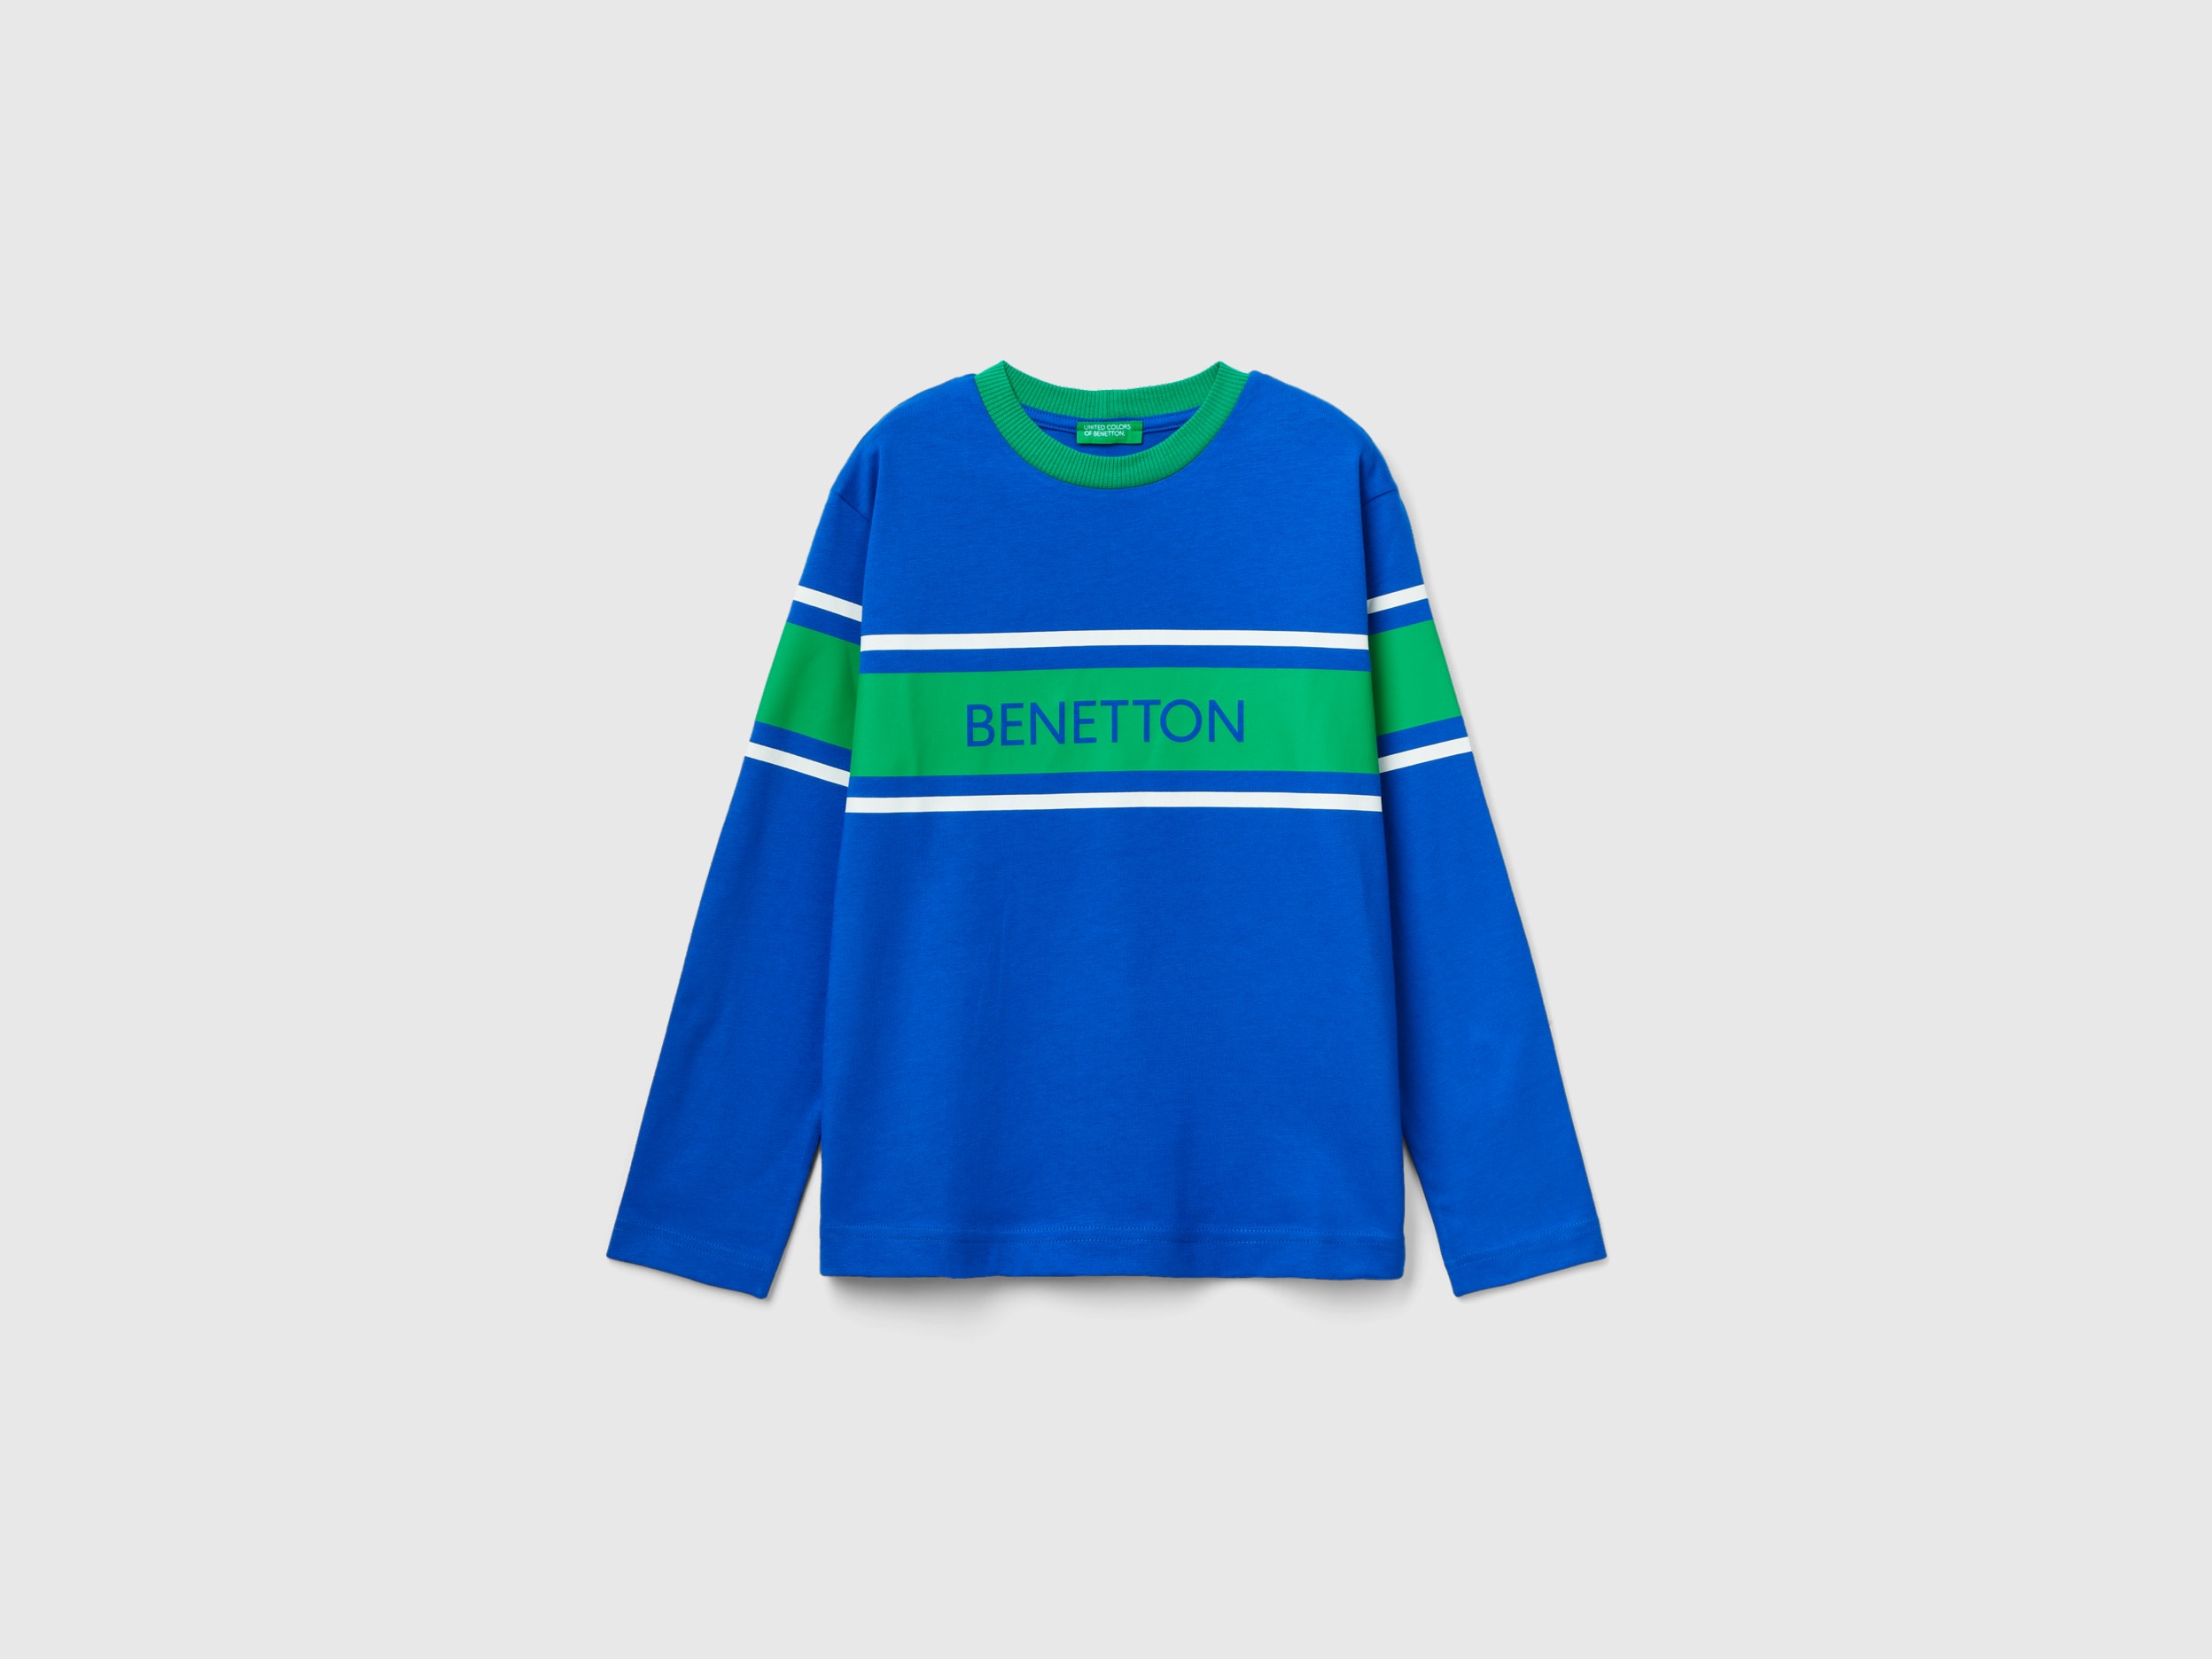 Benetton, Oversized Fit Crew Neck T-shirt, size M, Multi-color, Kids